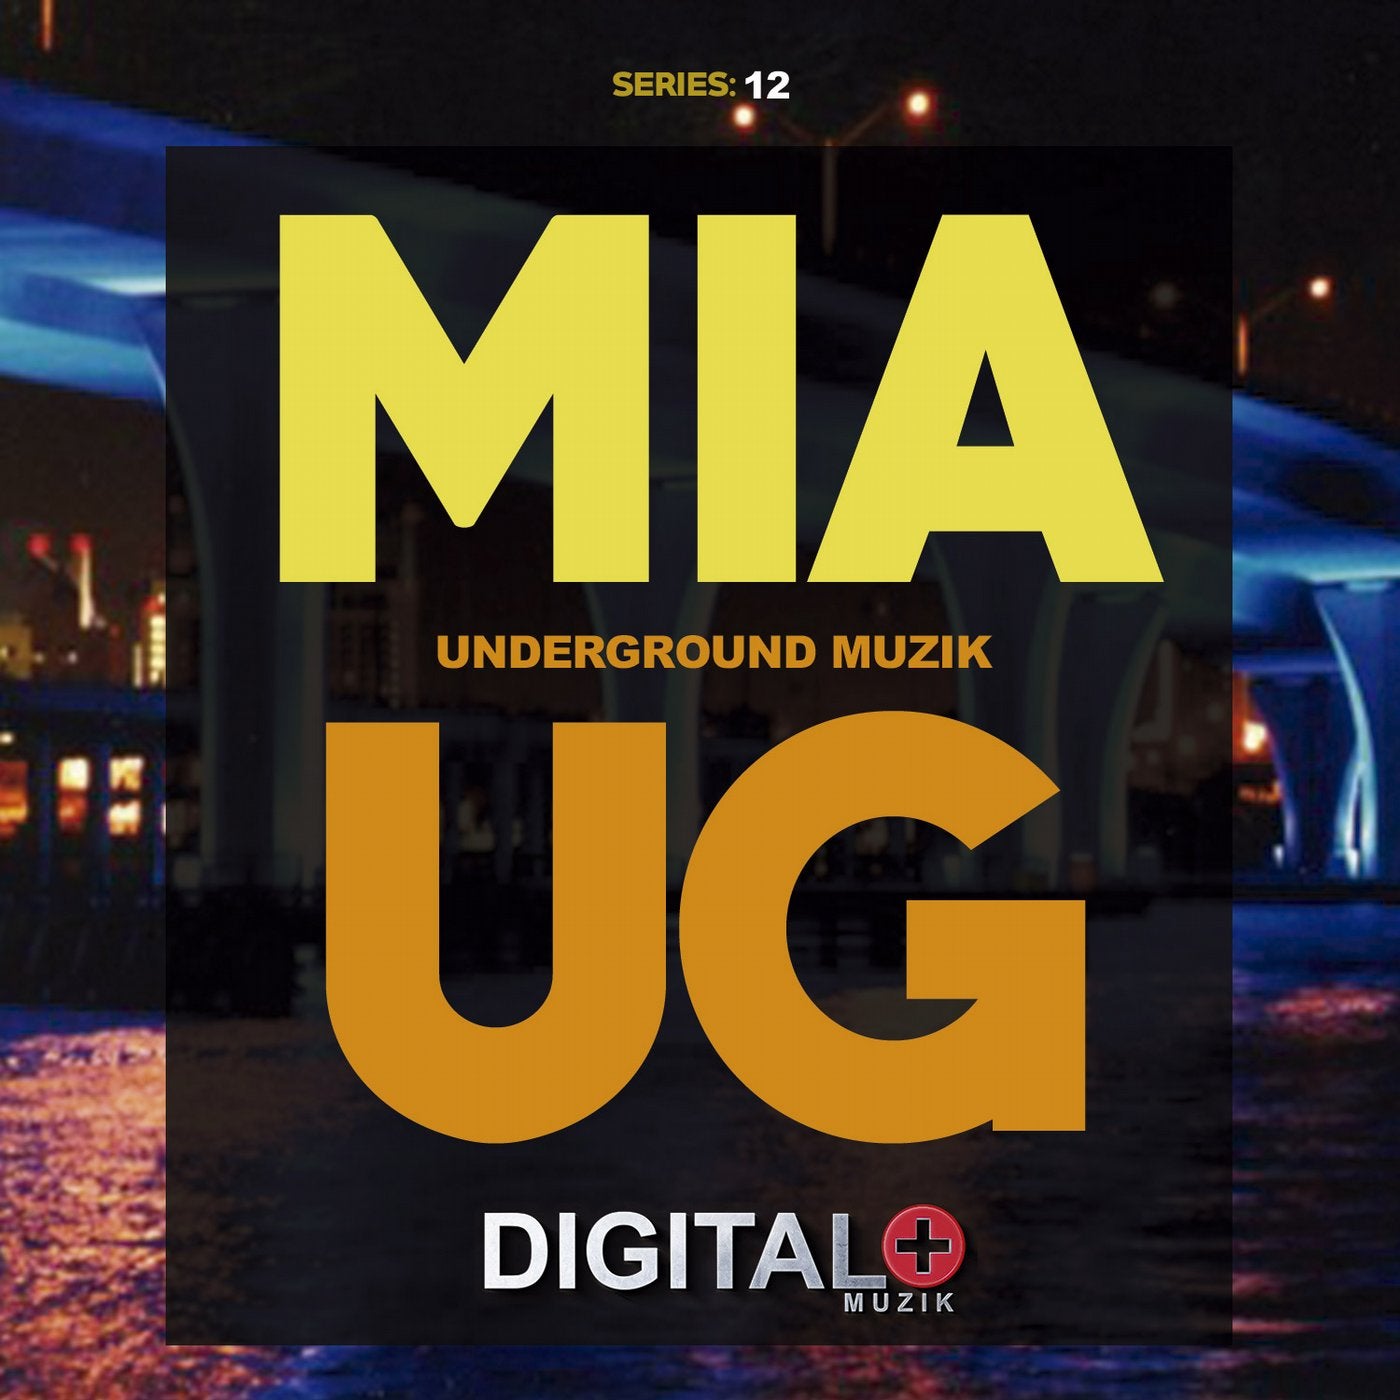 Miami Underground Muzik Series 12